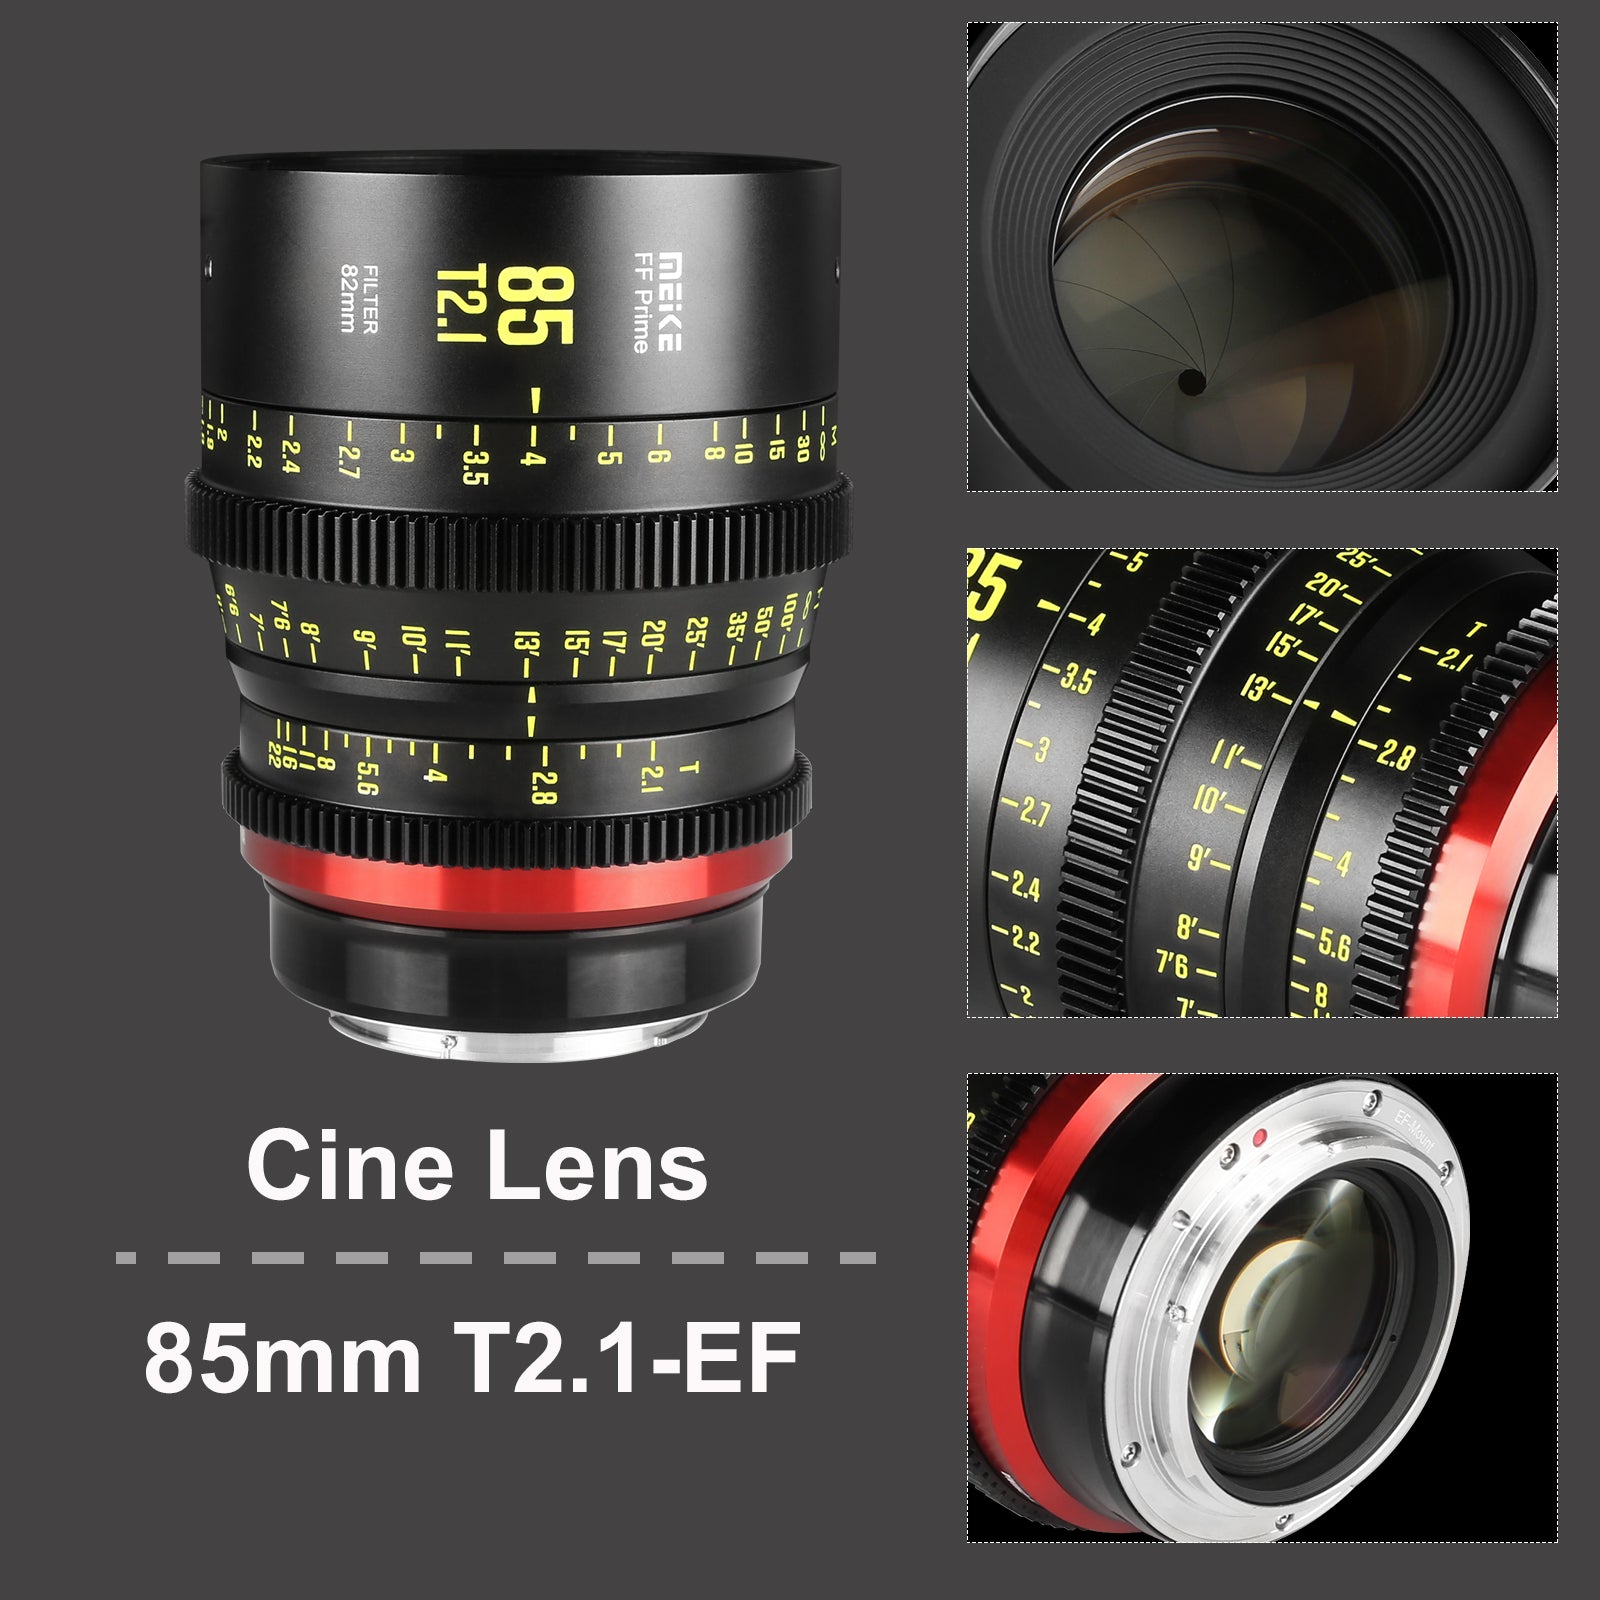 Meike Cinema Full Frame Cinema Prime 85mm T2.1 Lens (Canon EF Mount) in Different Perspectives